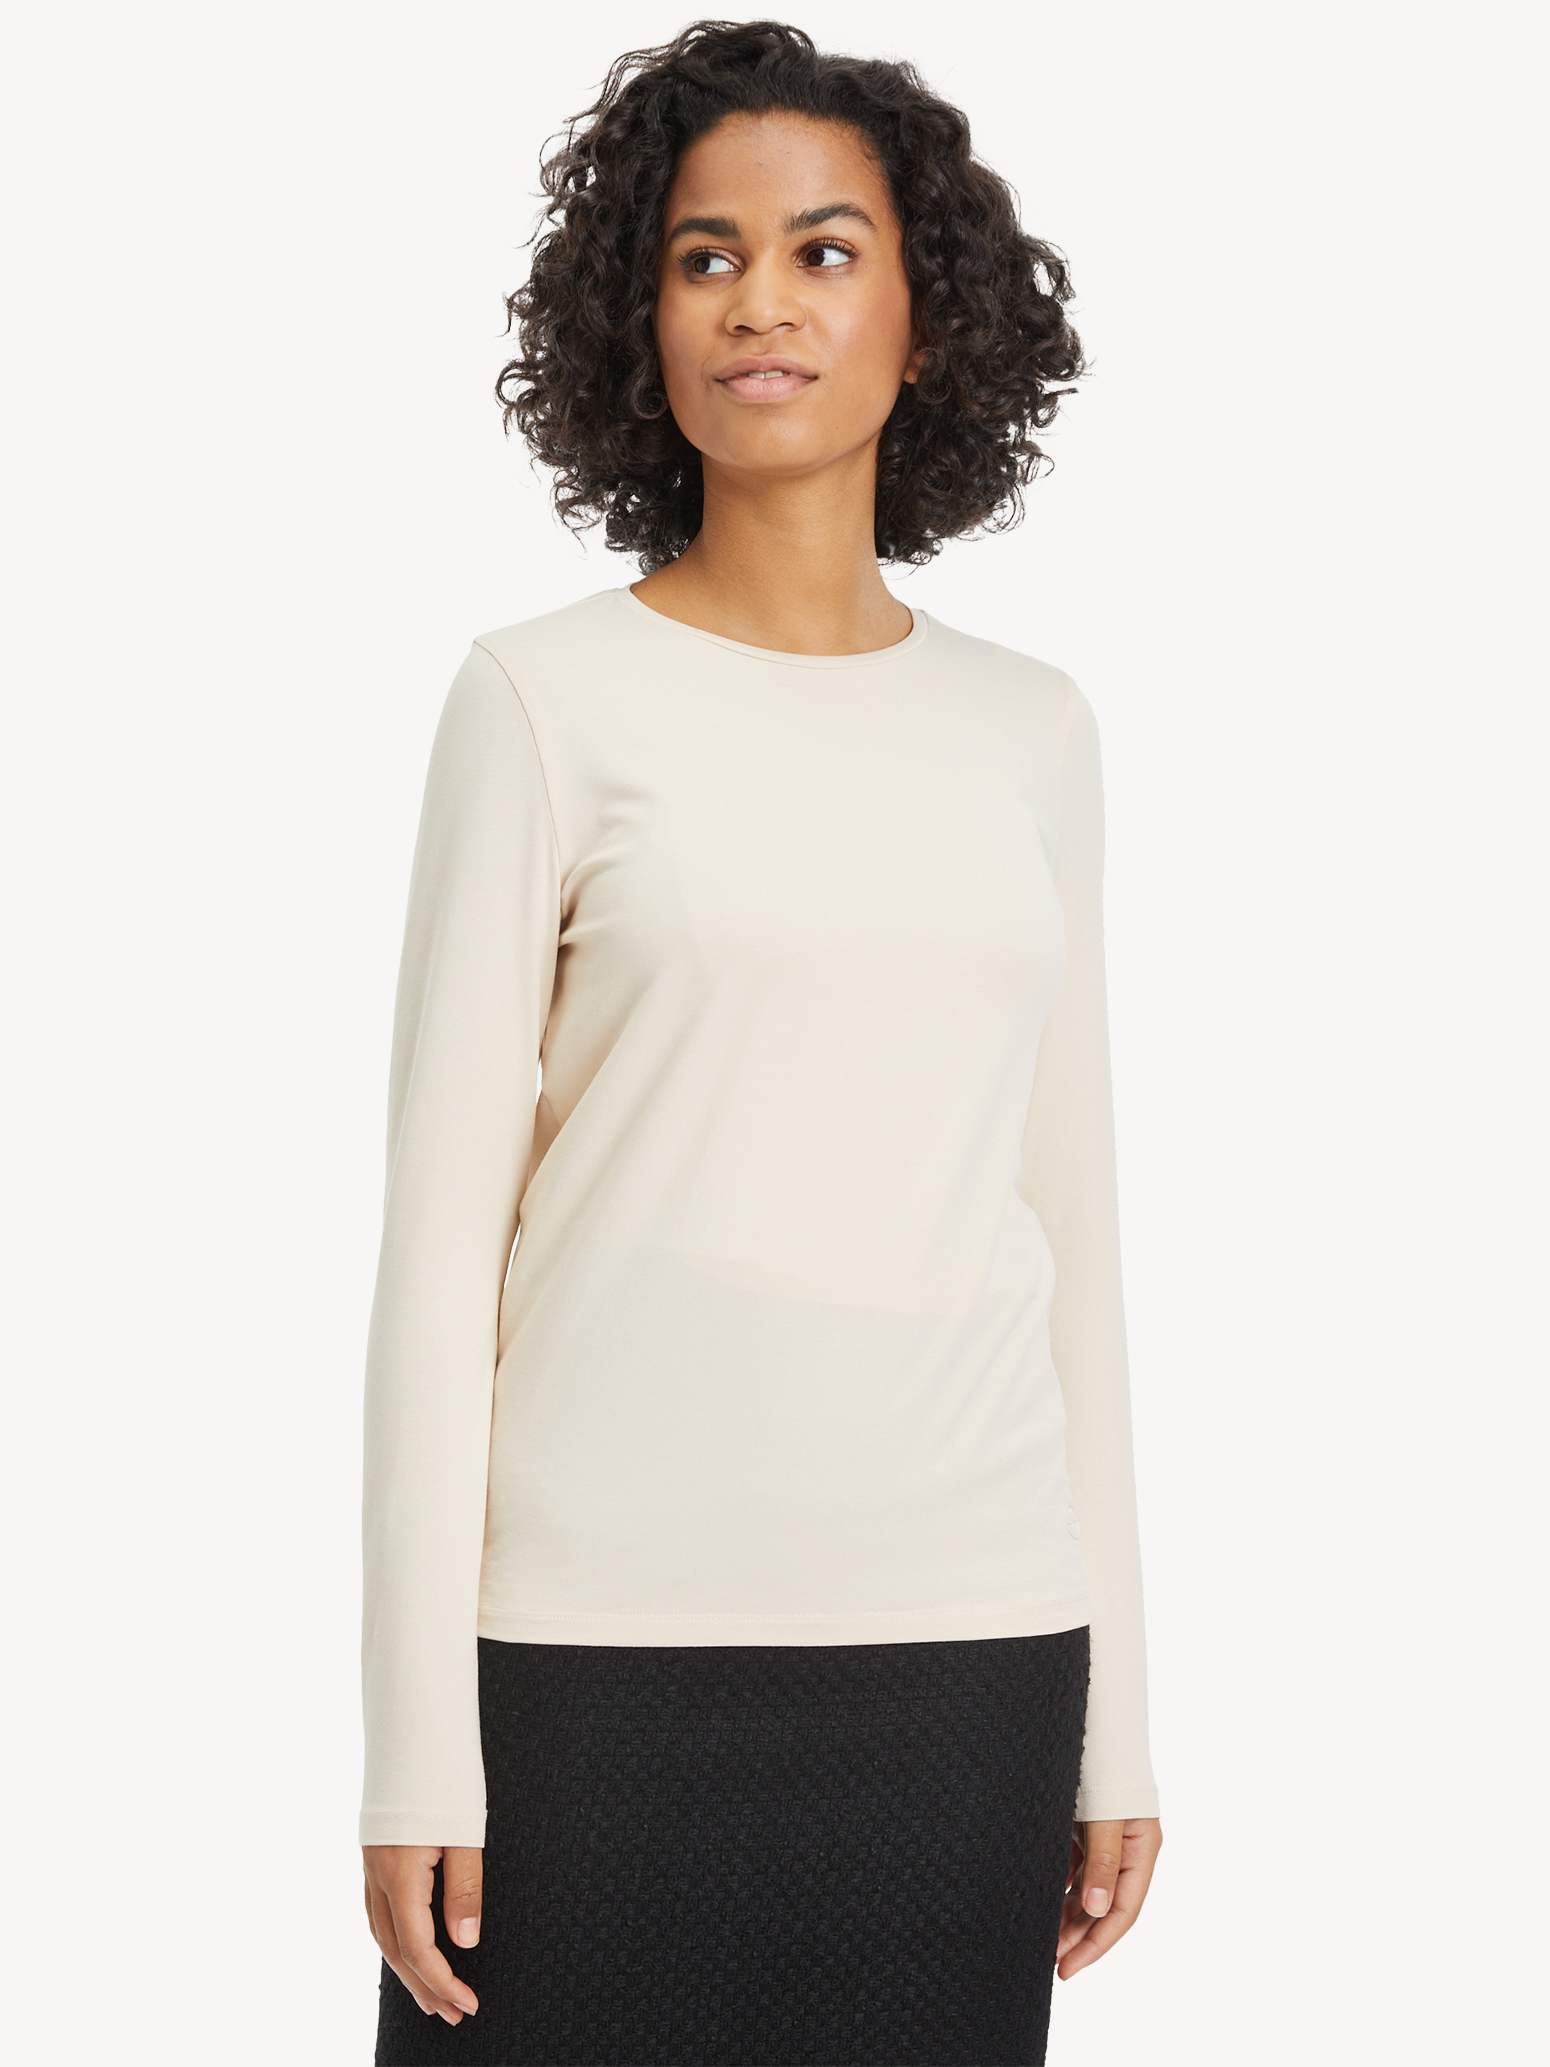 - online TAW0308-70031: Langarmshirt & kaufen! Sweatshirts Hoodies beige Tamaris